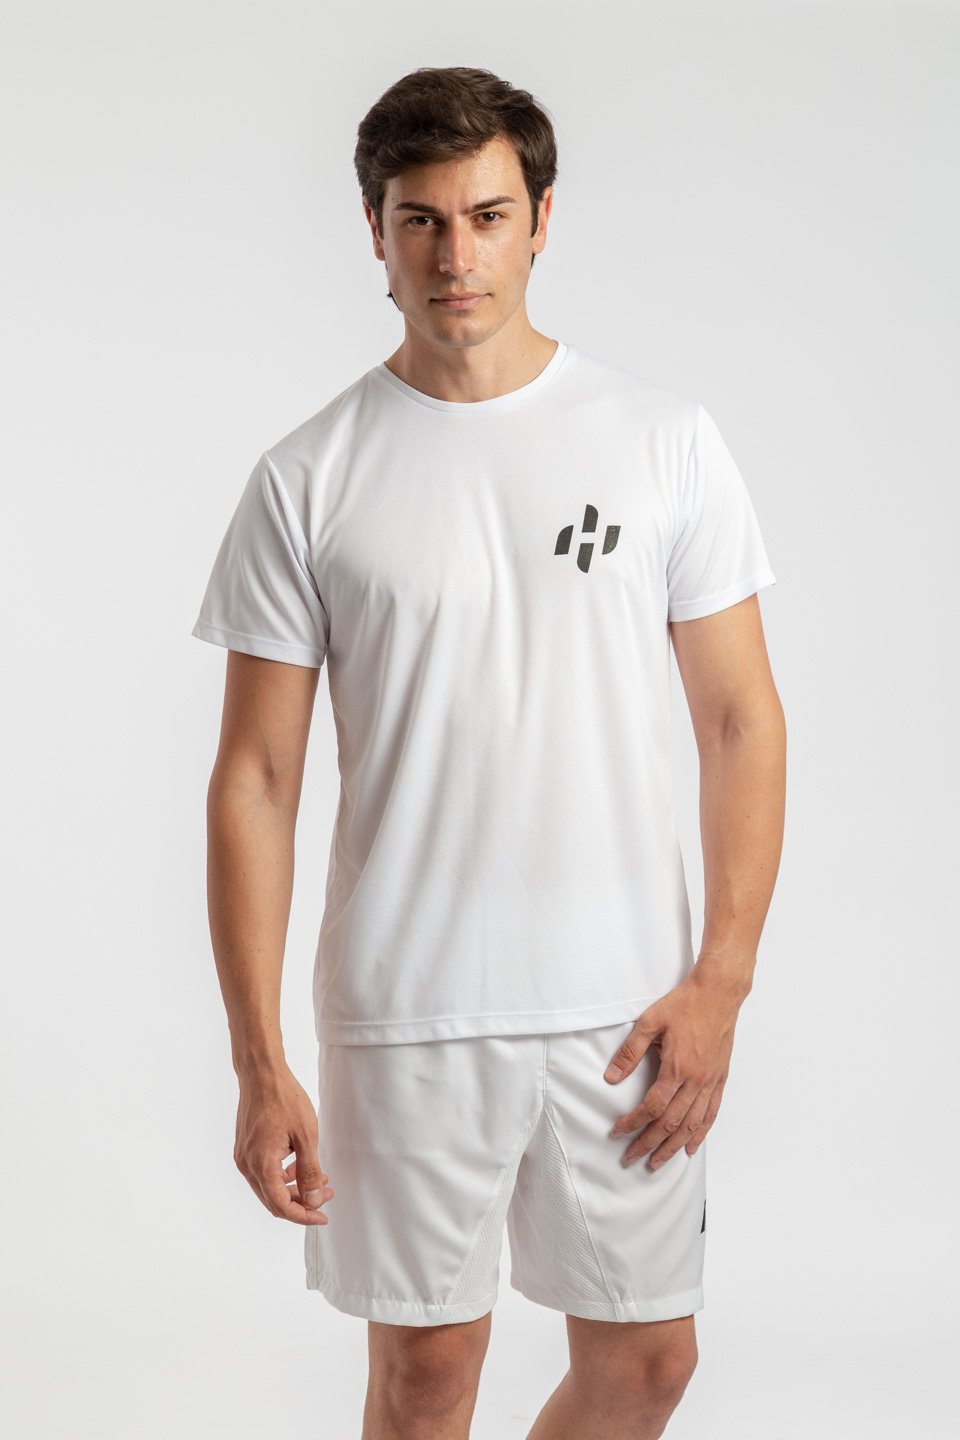 t-shirt-padel-hirostar-street-style-bianca6